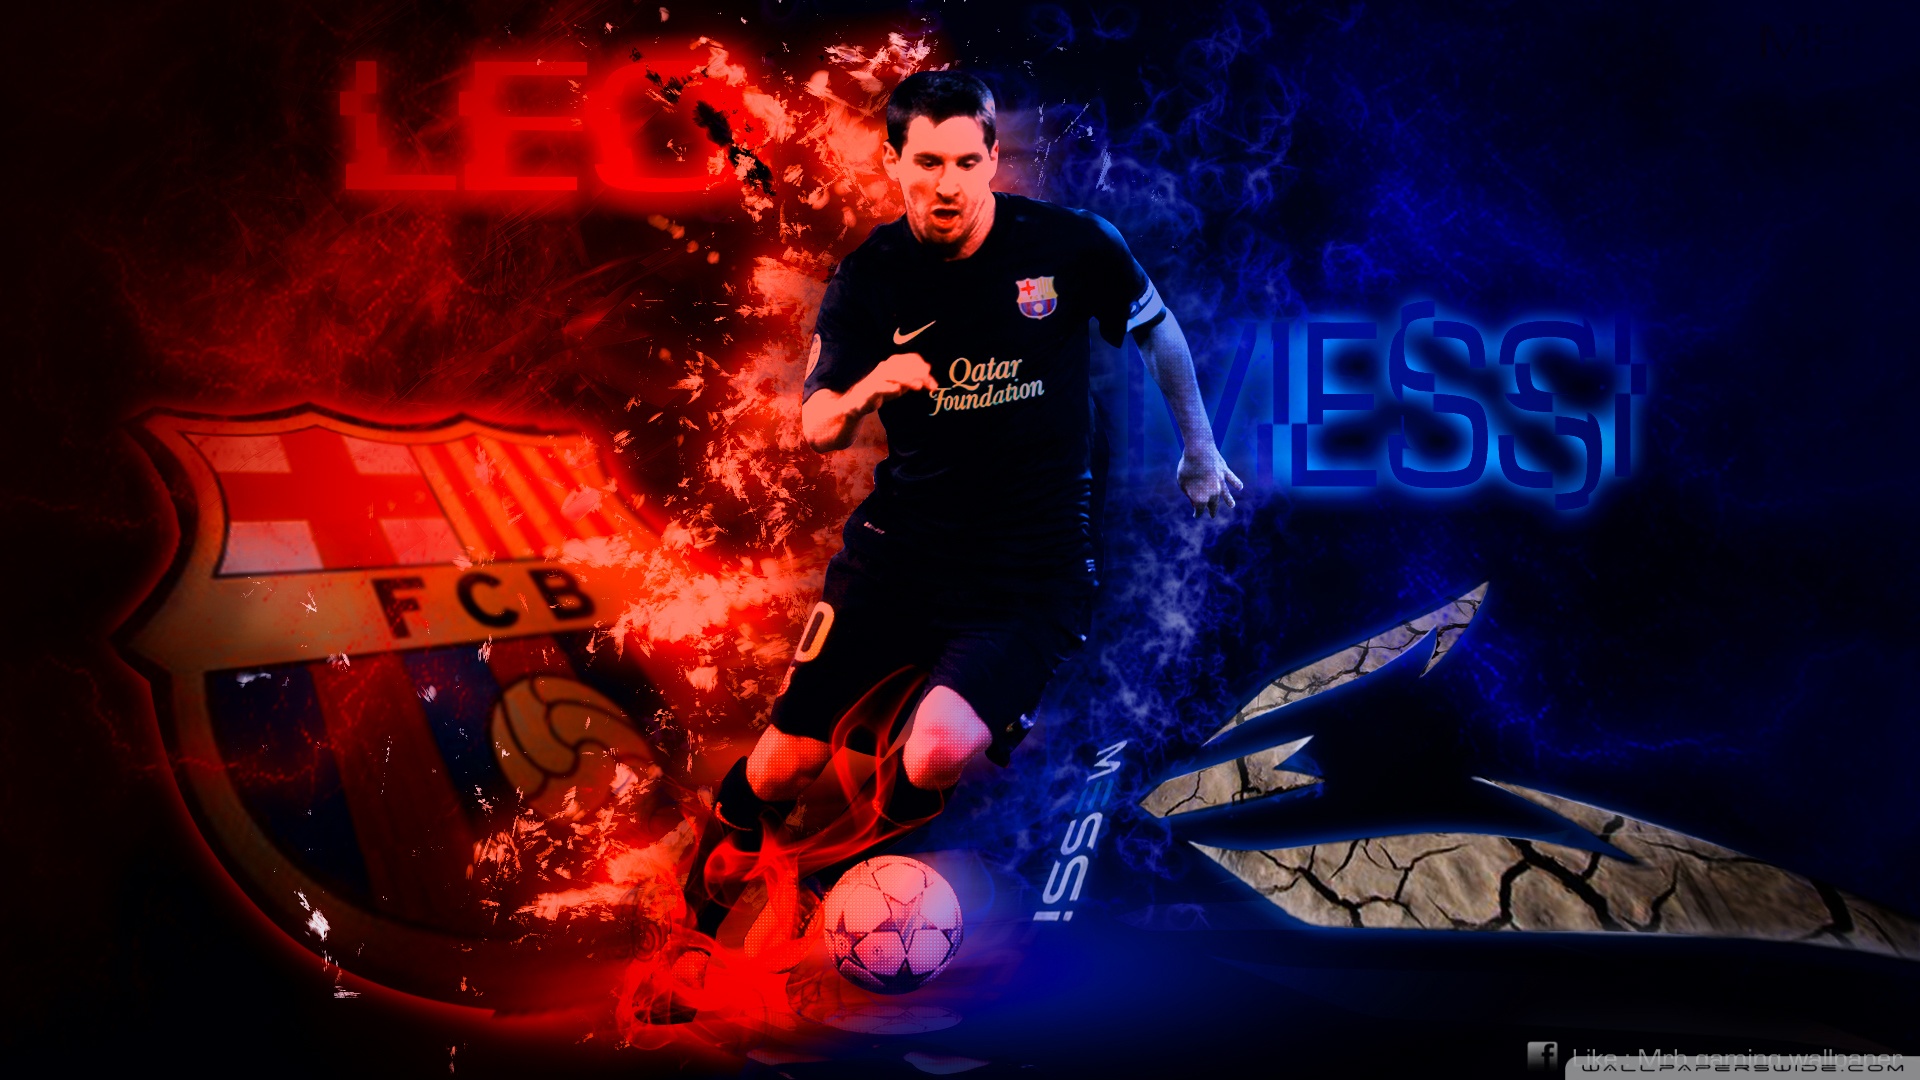  Messi Barcelona Wallpaper DESKTOP BACKGROUNDS Best Wallpapers HQ 1920x1080